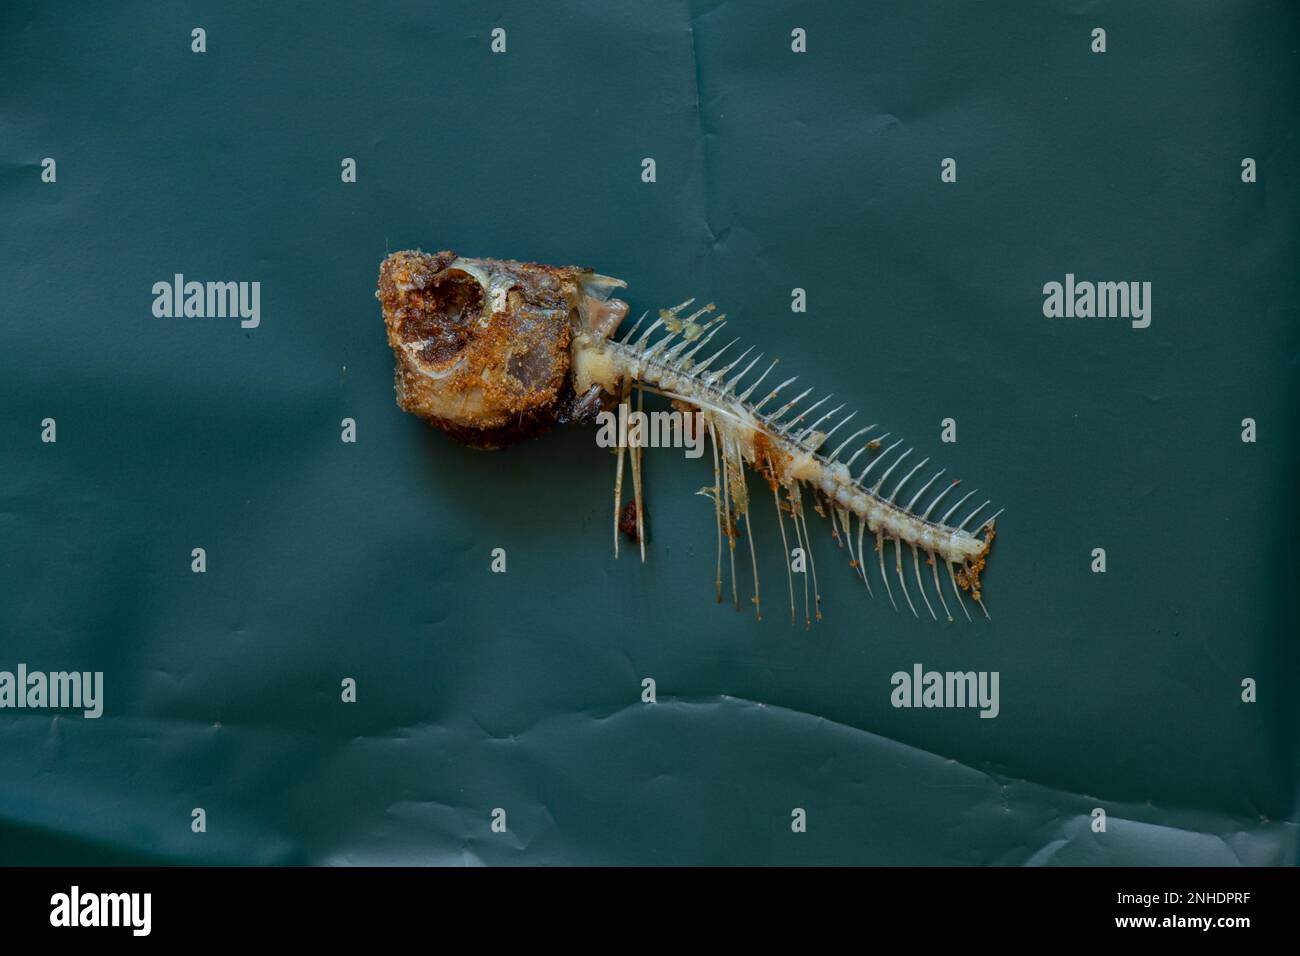 fried fish skeleton on dark green paper close up Stock Photo